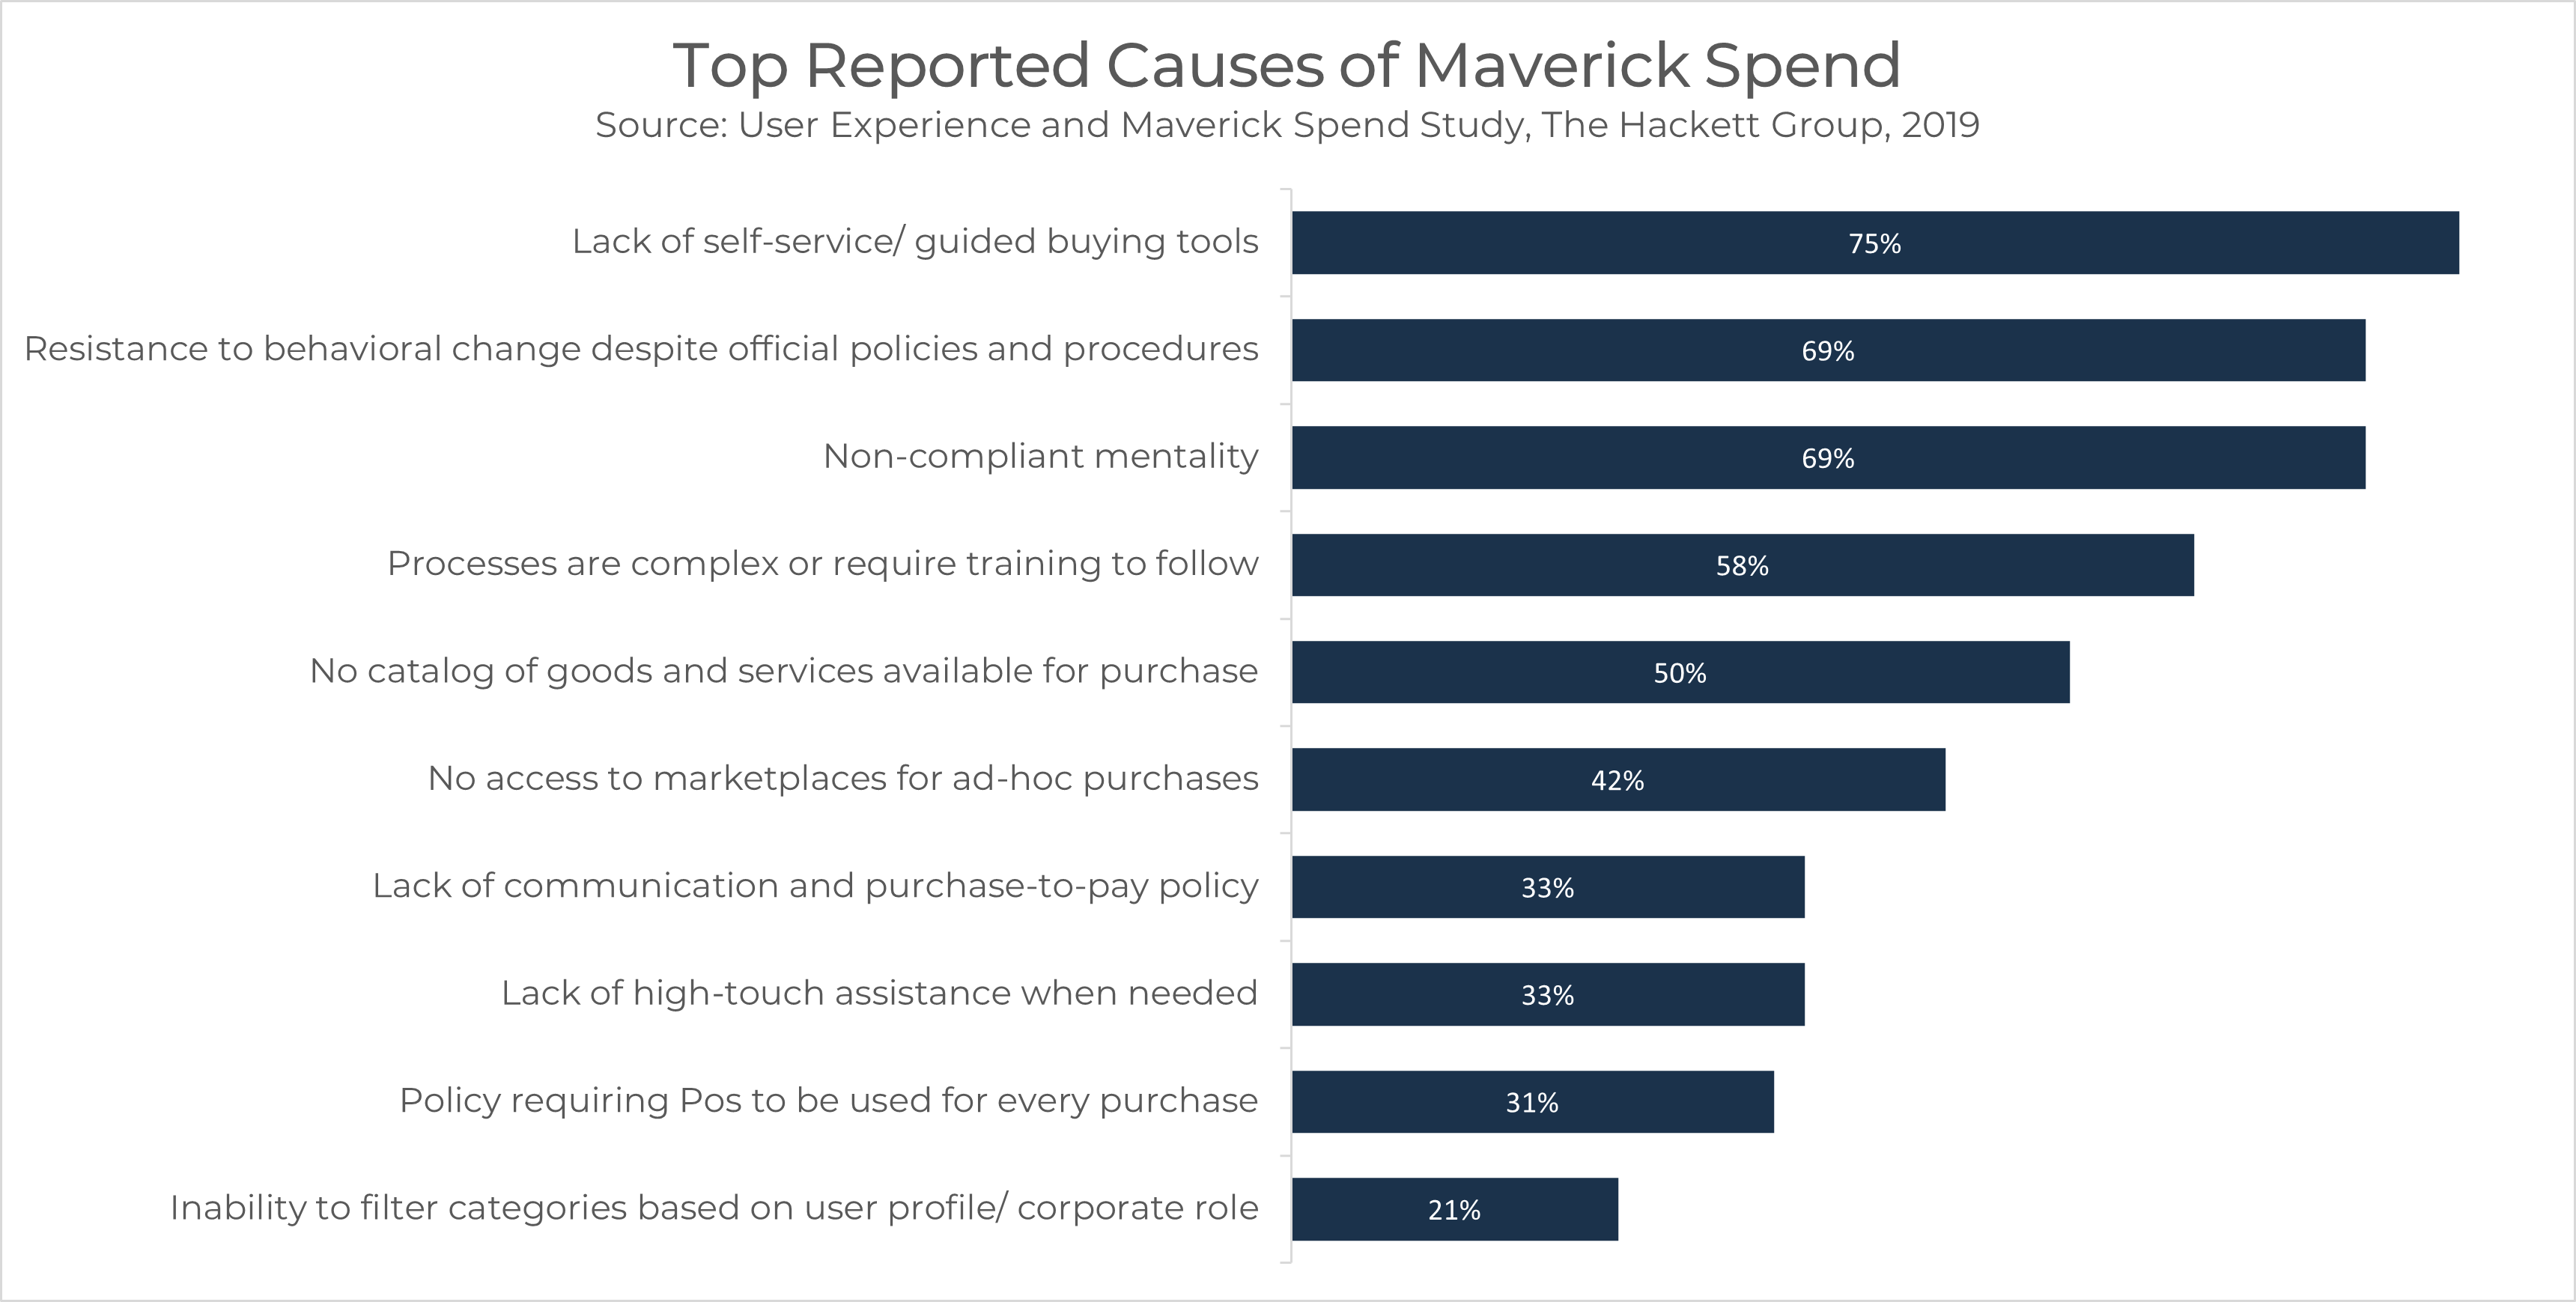 Top causes of Maverick Spend 